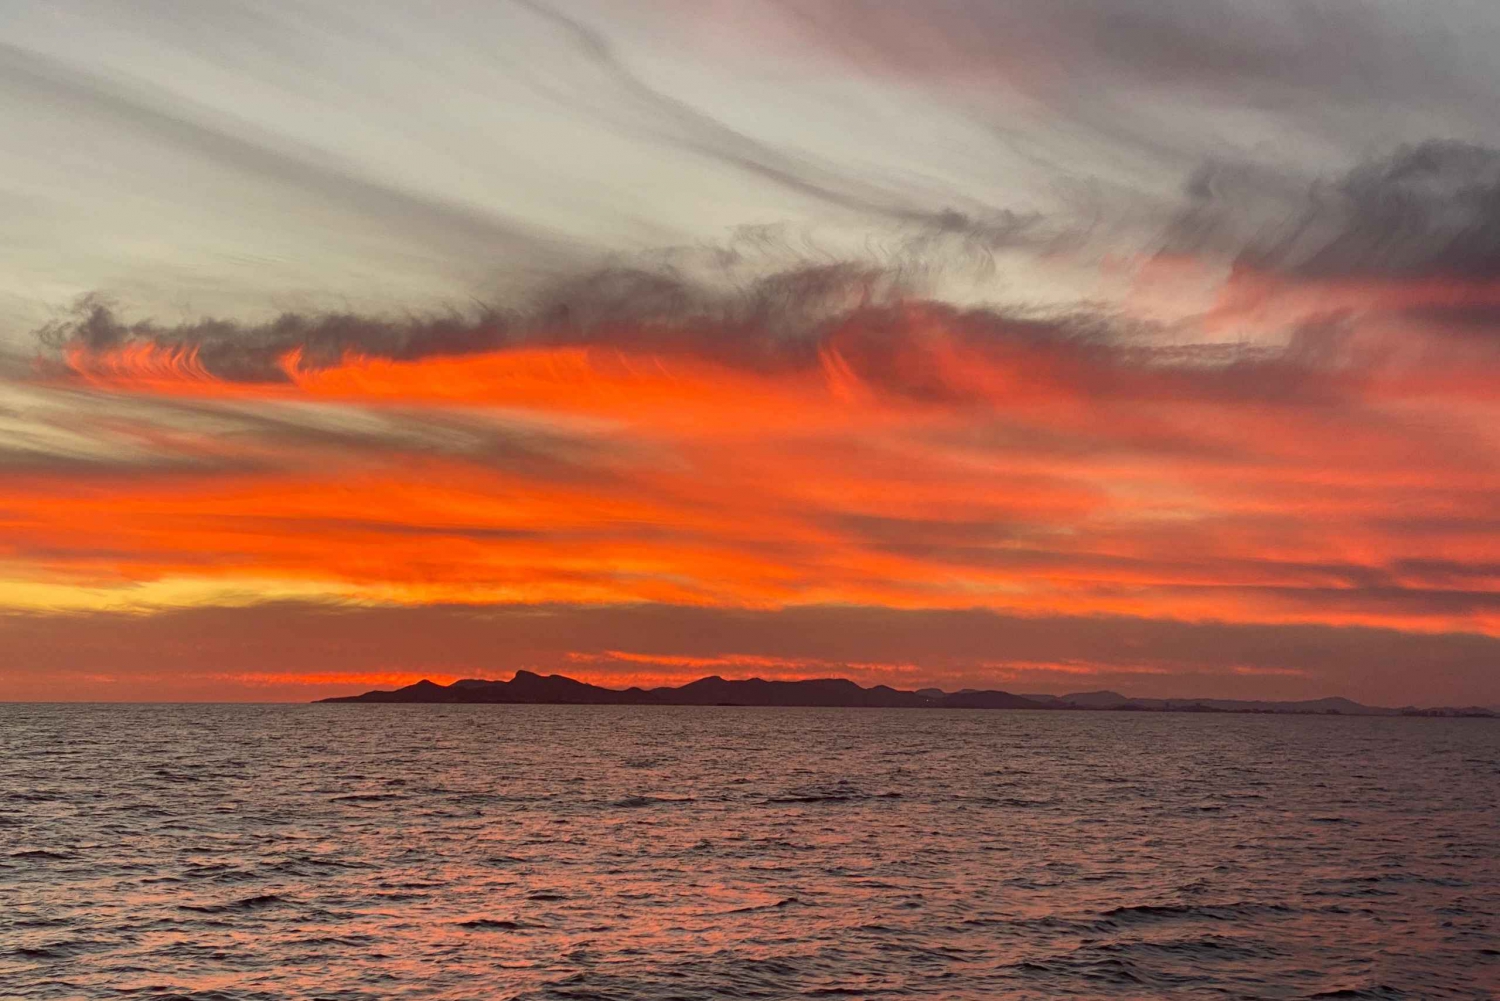 Sunset on a luxury sailing yacht - Lagos - Algarve